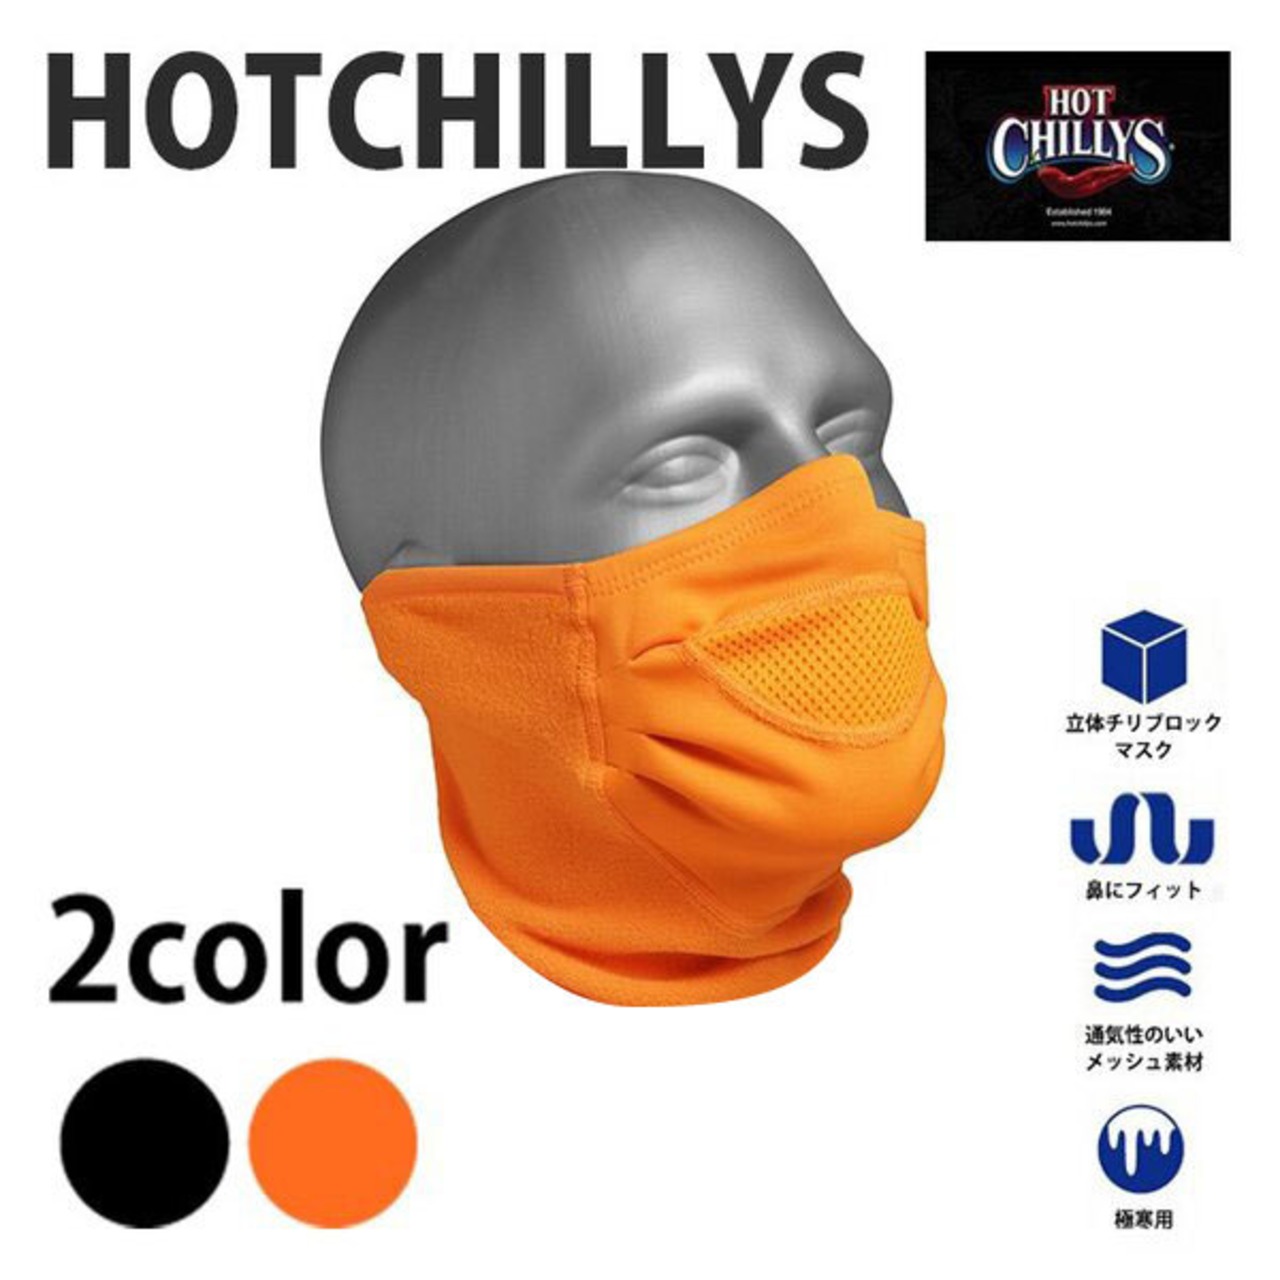 HOT CHILLYS (ホットチリーズ) チルブロック ロング マスク HC6138